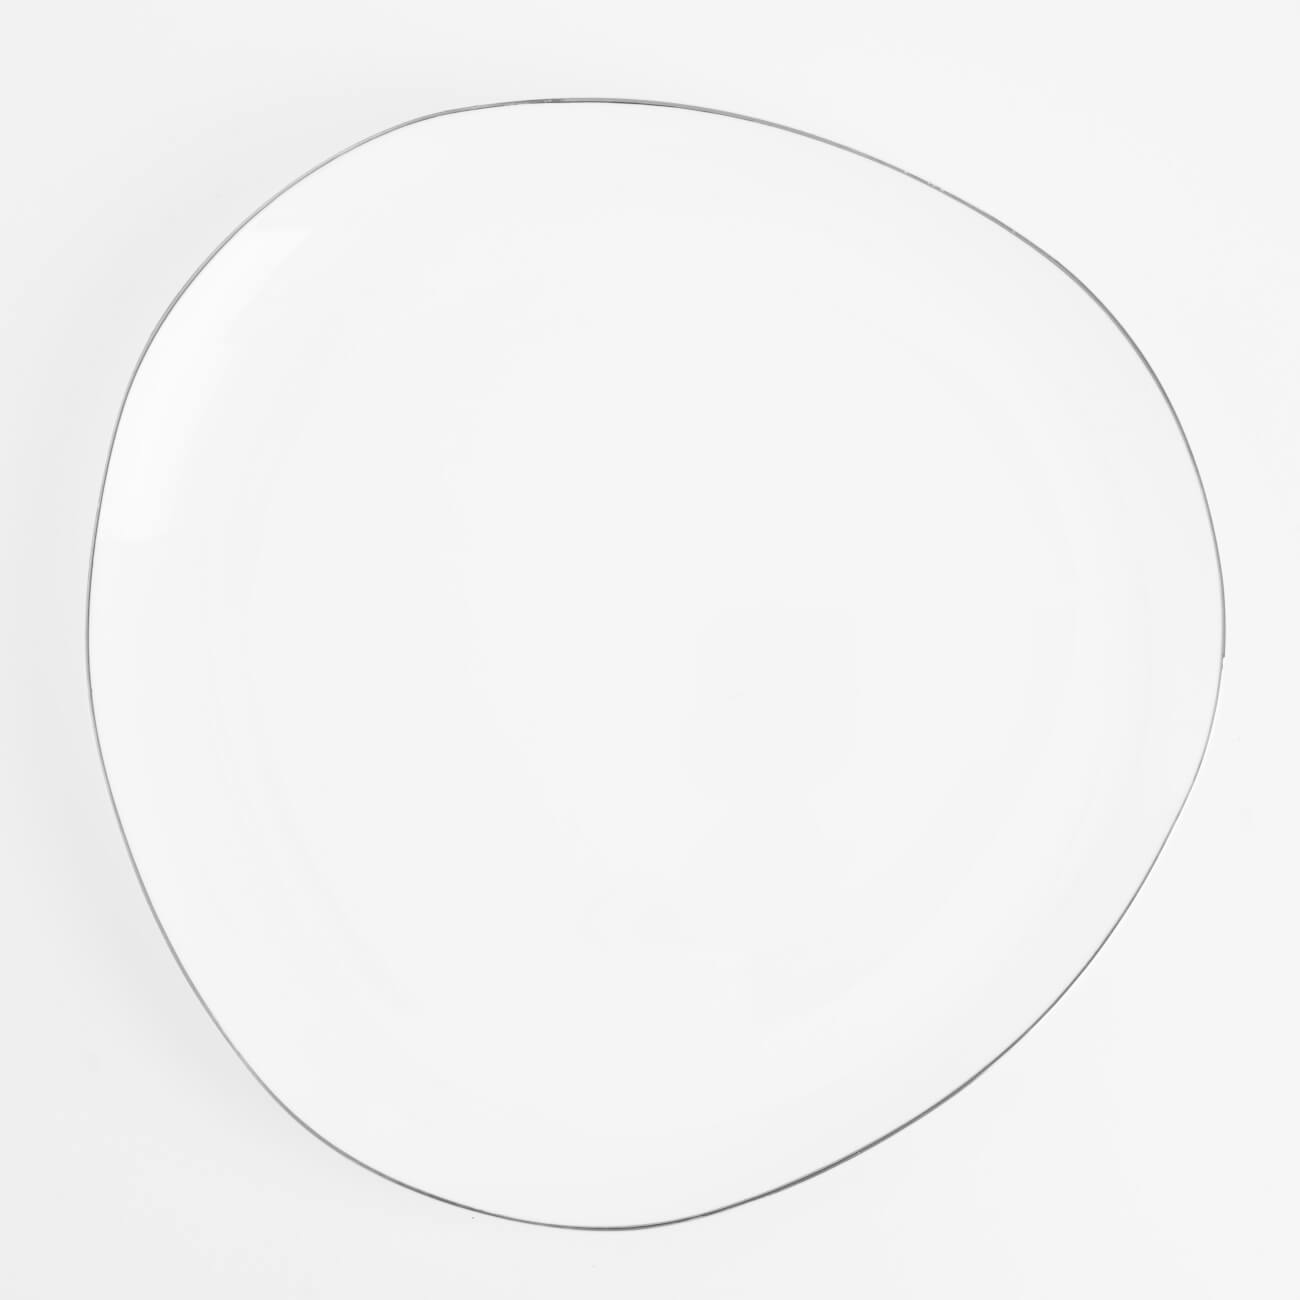 Тарелка закусочная, 21 см, фарфор F, белая, Bend silver тарелка закусочная детская 22х15 см фарфор р бежевая фигурная зайчик friend